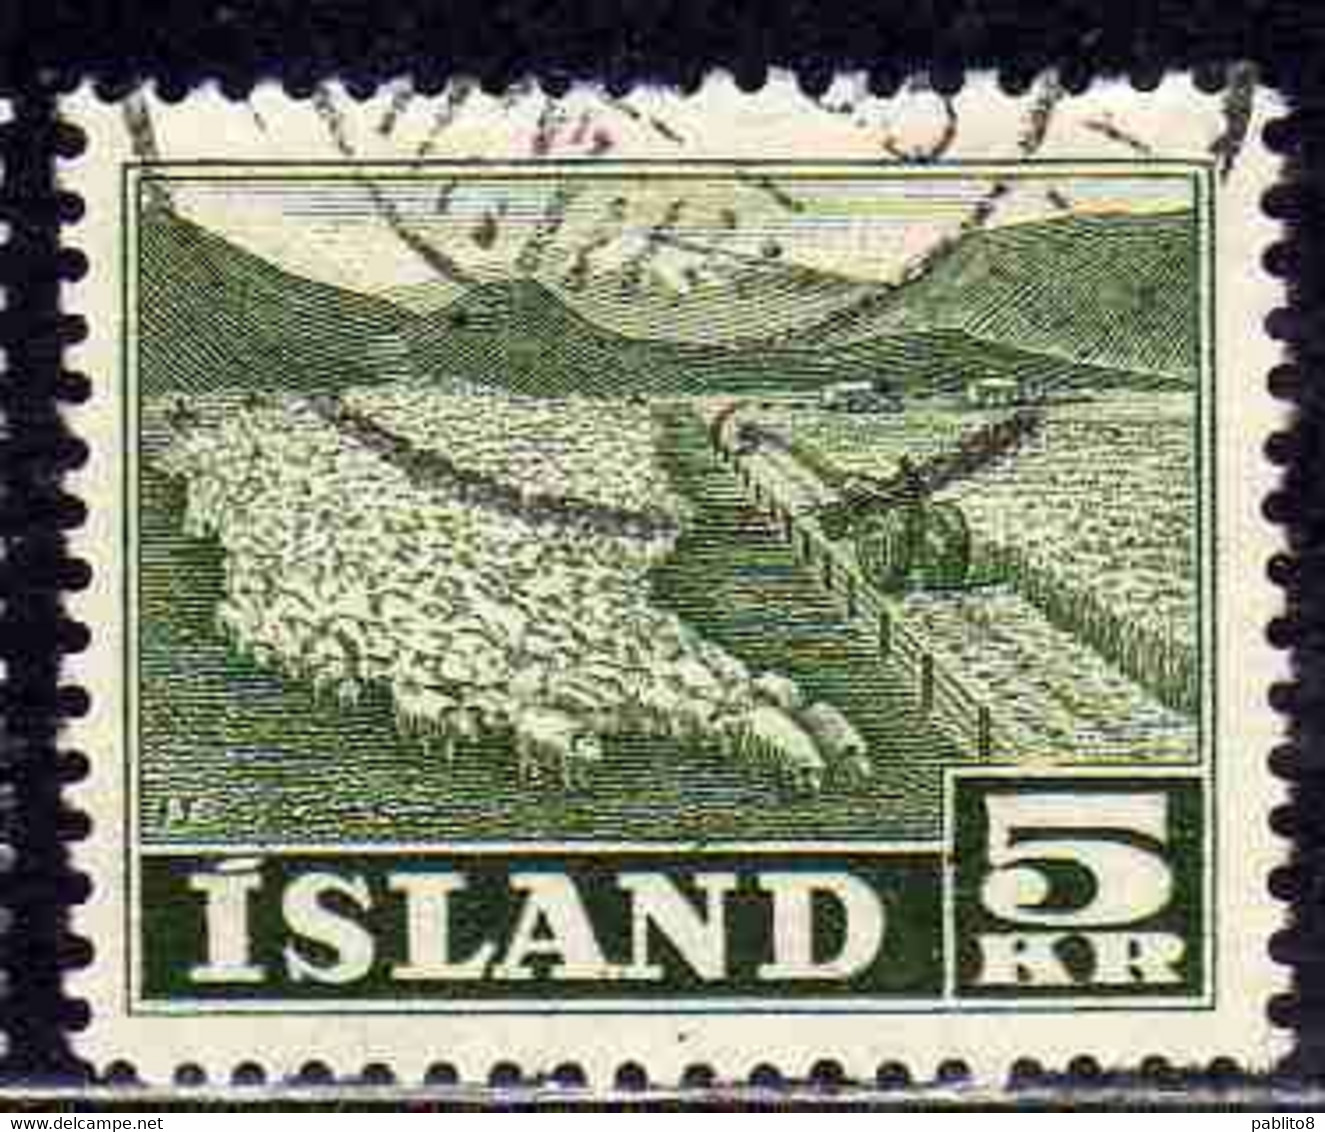 ISLANDA ICELAND ISLANDE 1950 1954 FLOCK OF SHEEP 5k USED USATO OBLITERE' - Oblitérés